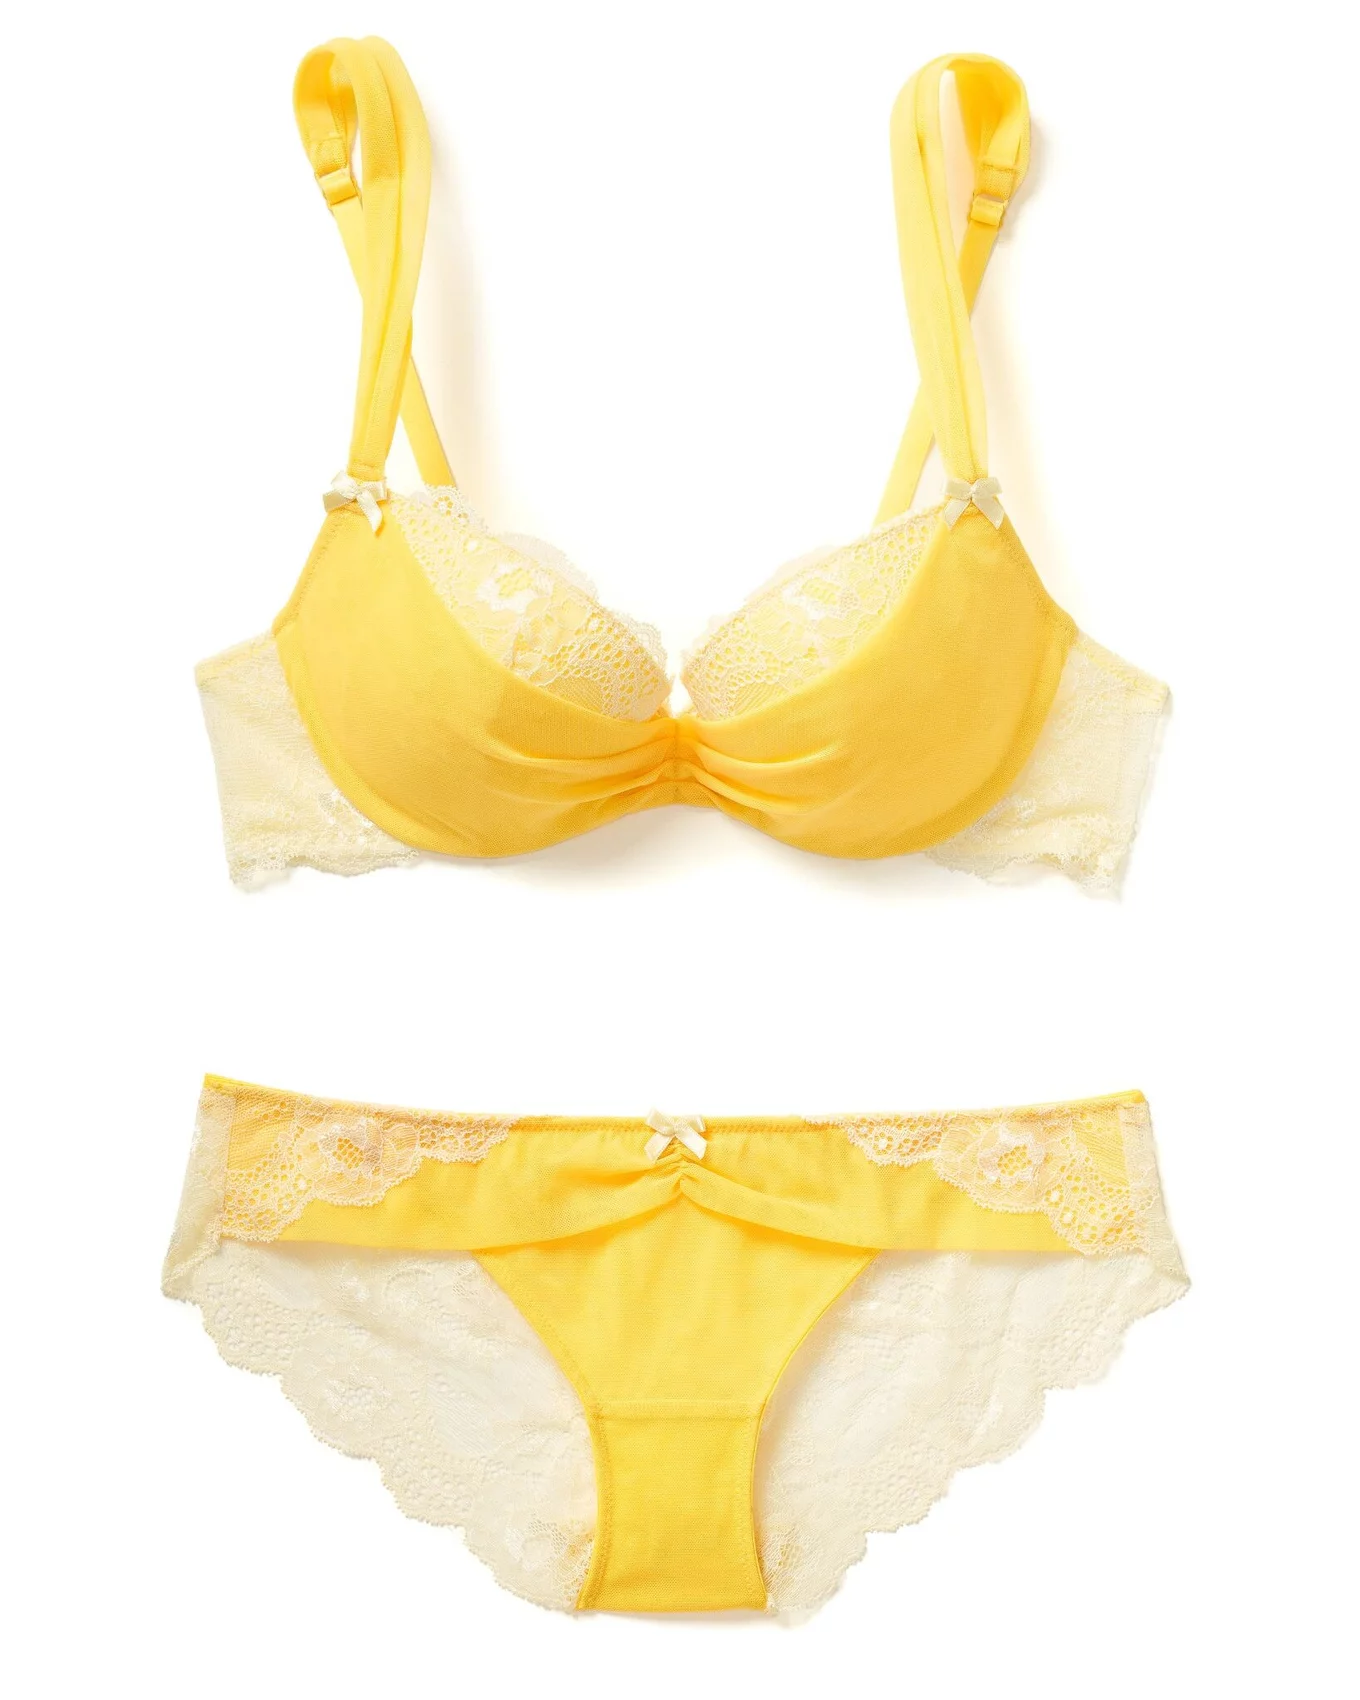 ❗️38b yellow bra and XL thong panty set